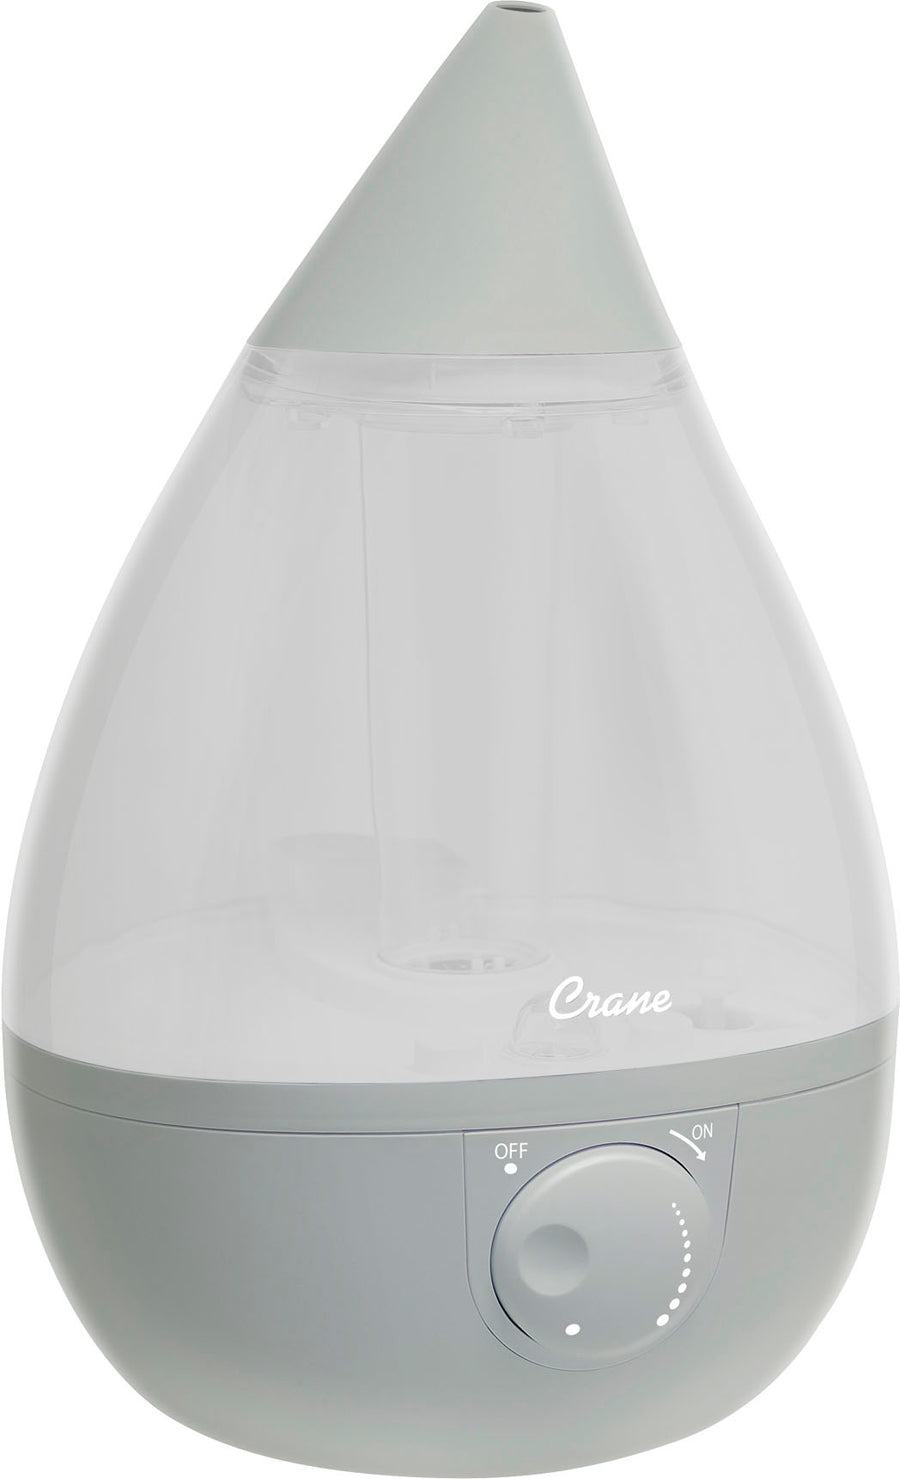 CRANE - 1 Gal. Drop Ultrasonic Cool Mist Humidifier - Grey_0